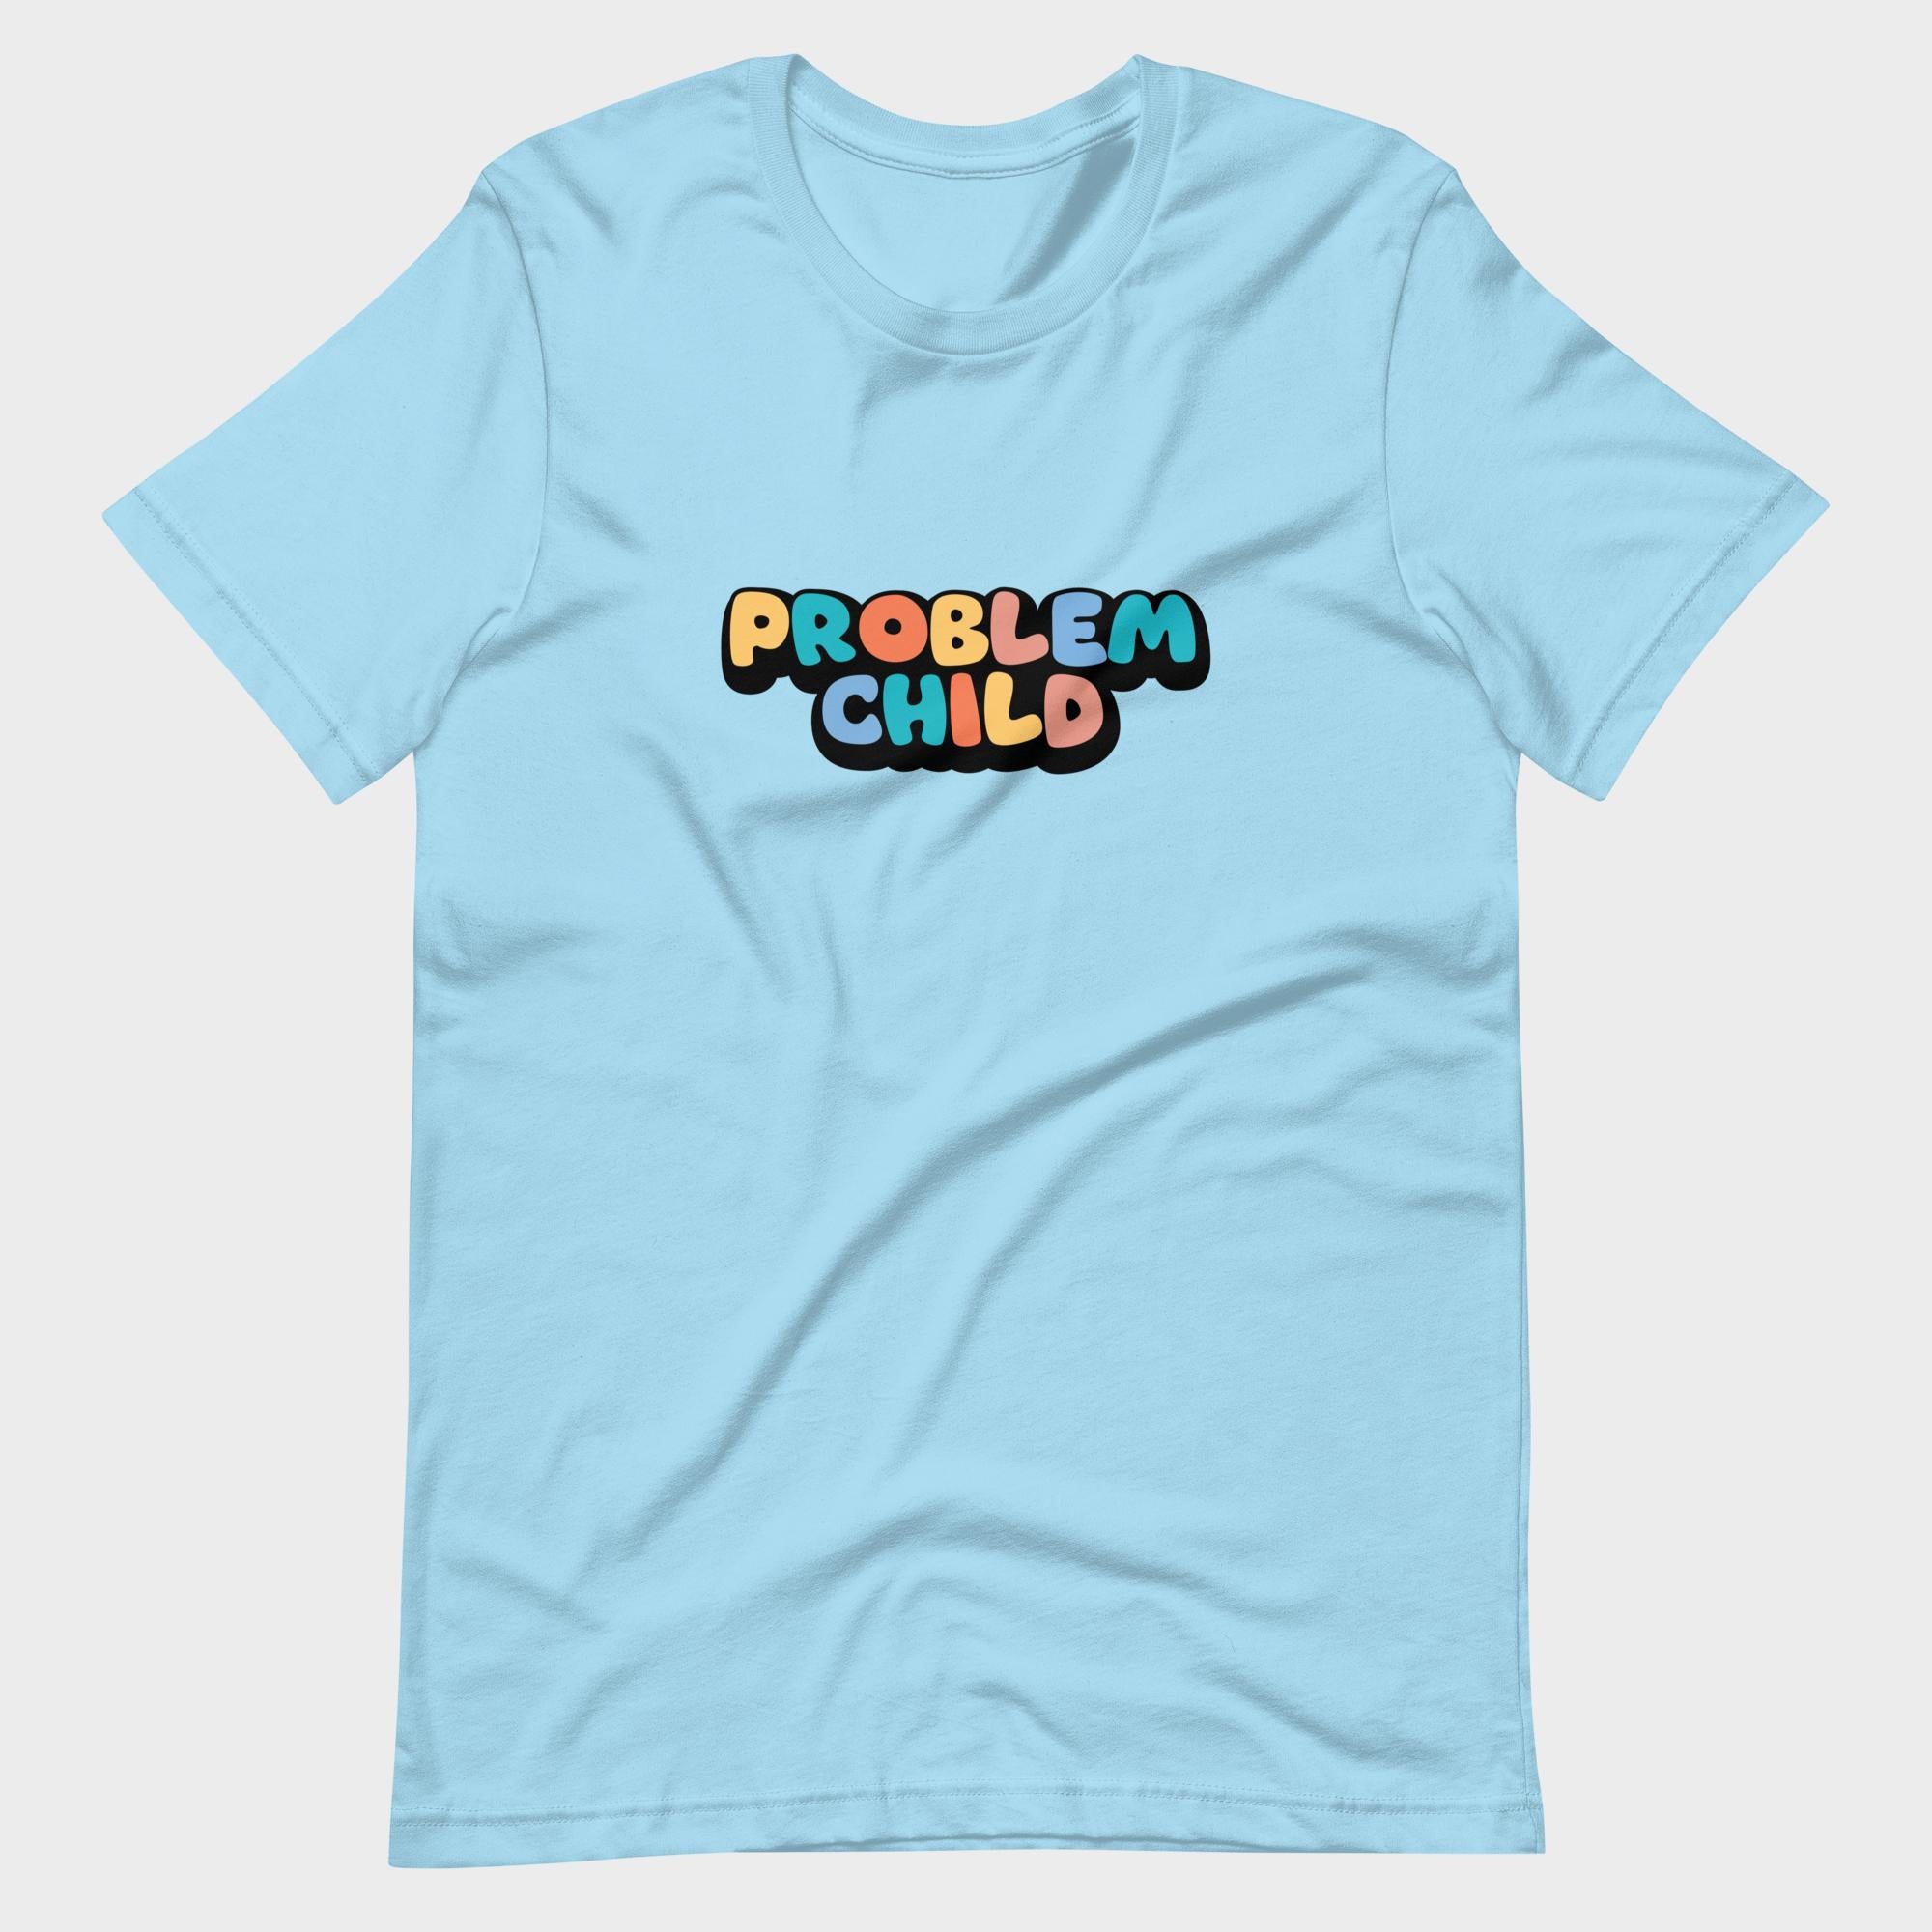 Problem Child - T-Shirt